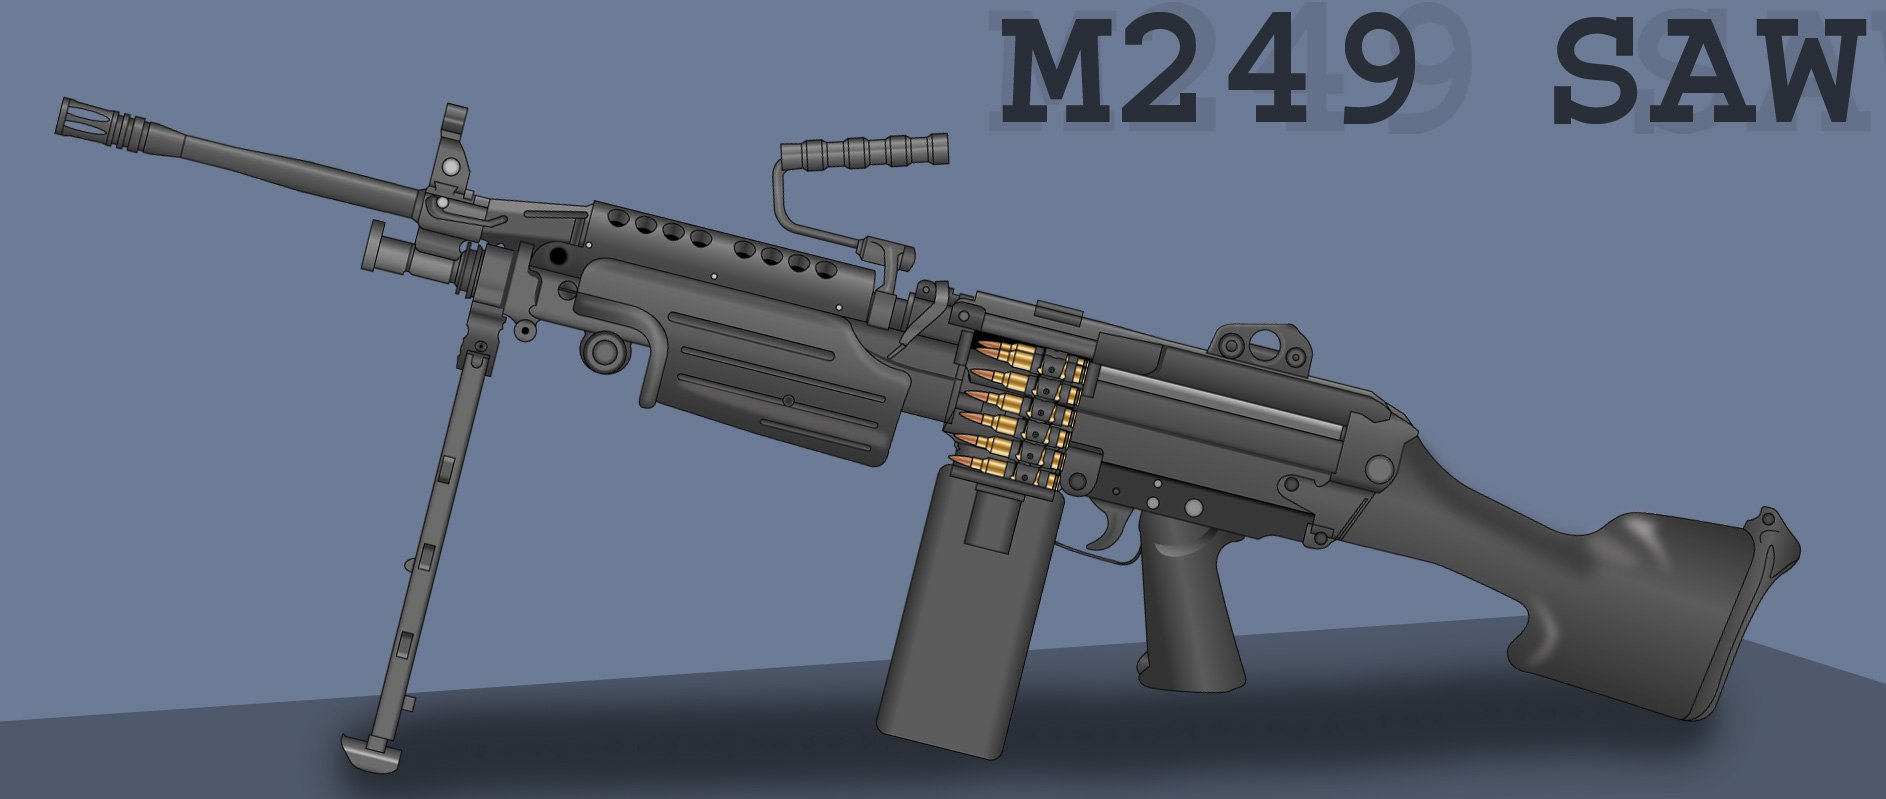 M249 SAW by Sacknassos